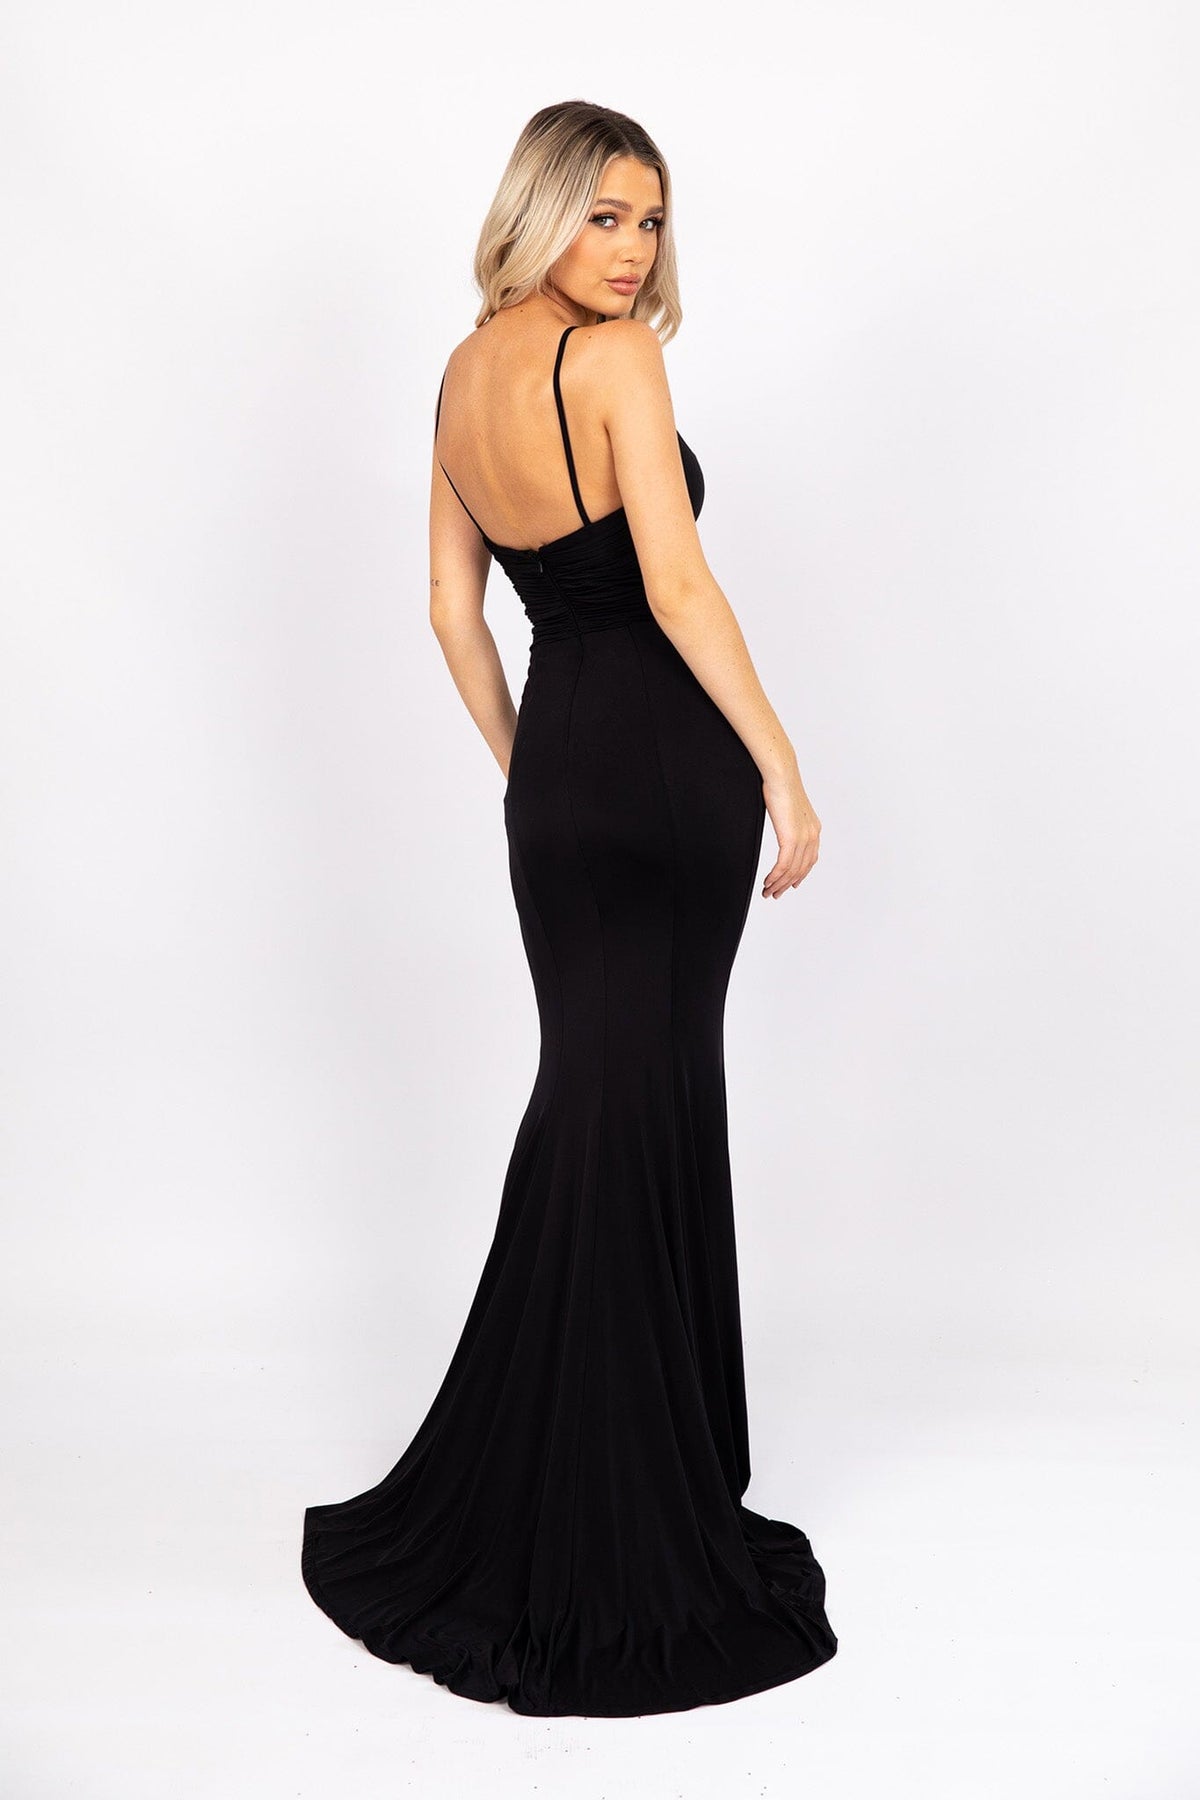 Open Back Design and Thin Shoulder Straps of Black Floor Length Fitted Evening Dress with Deep V Neckline